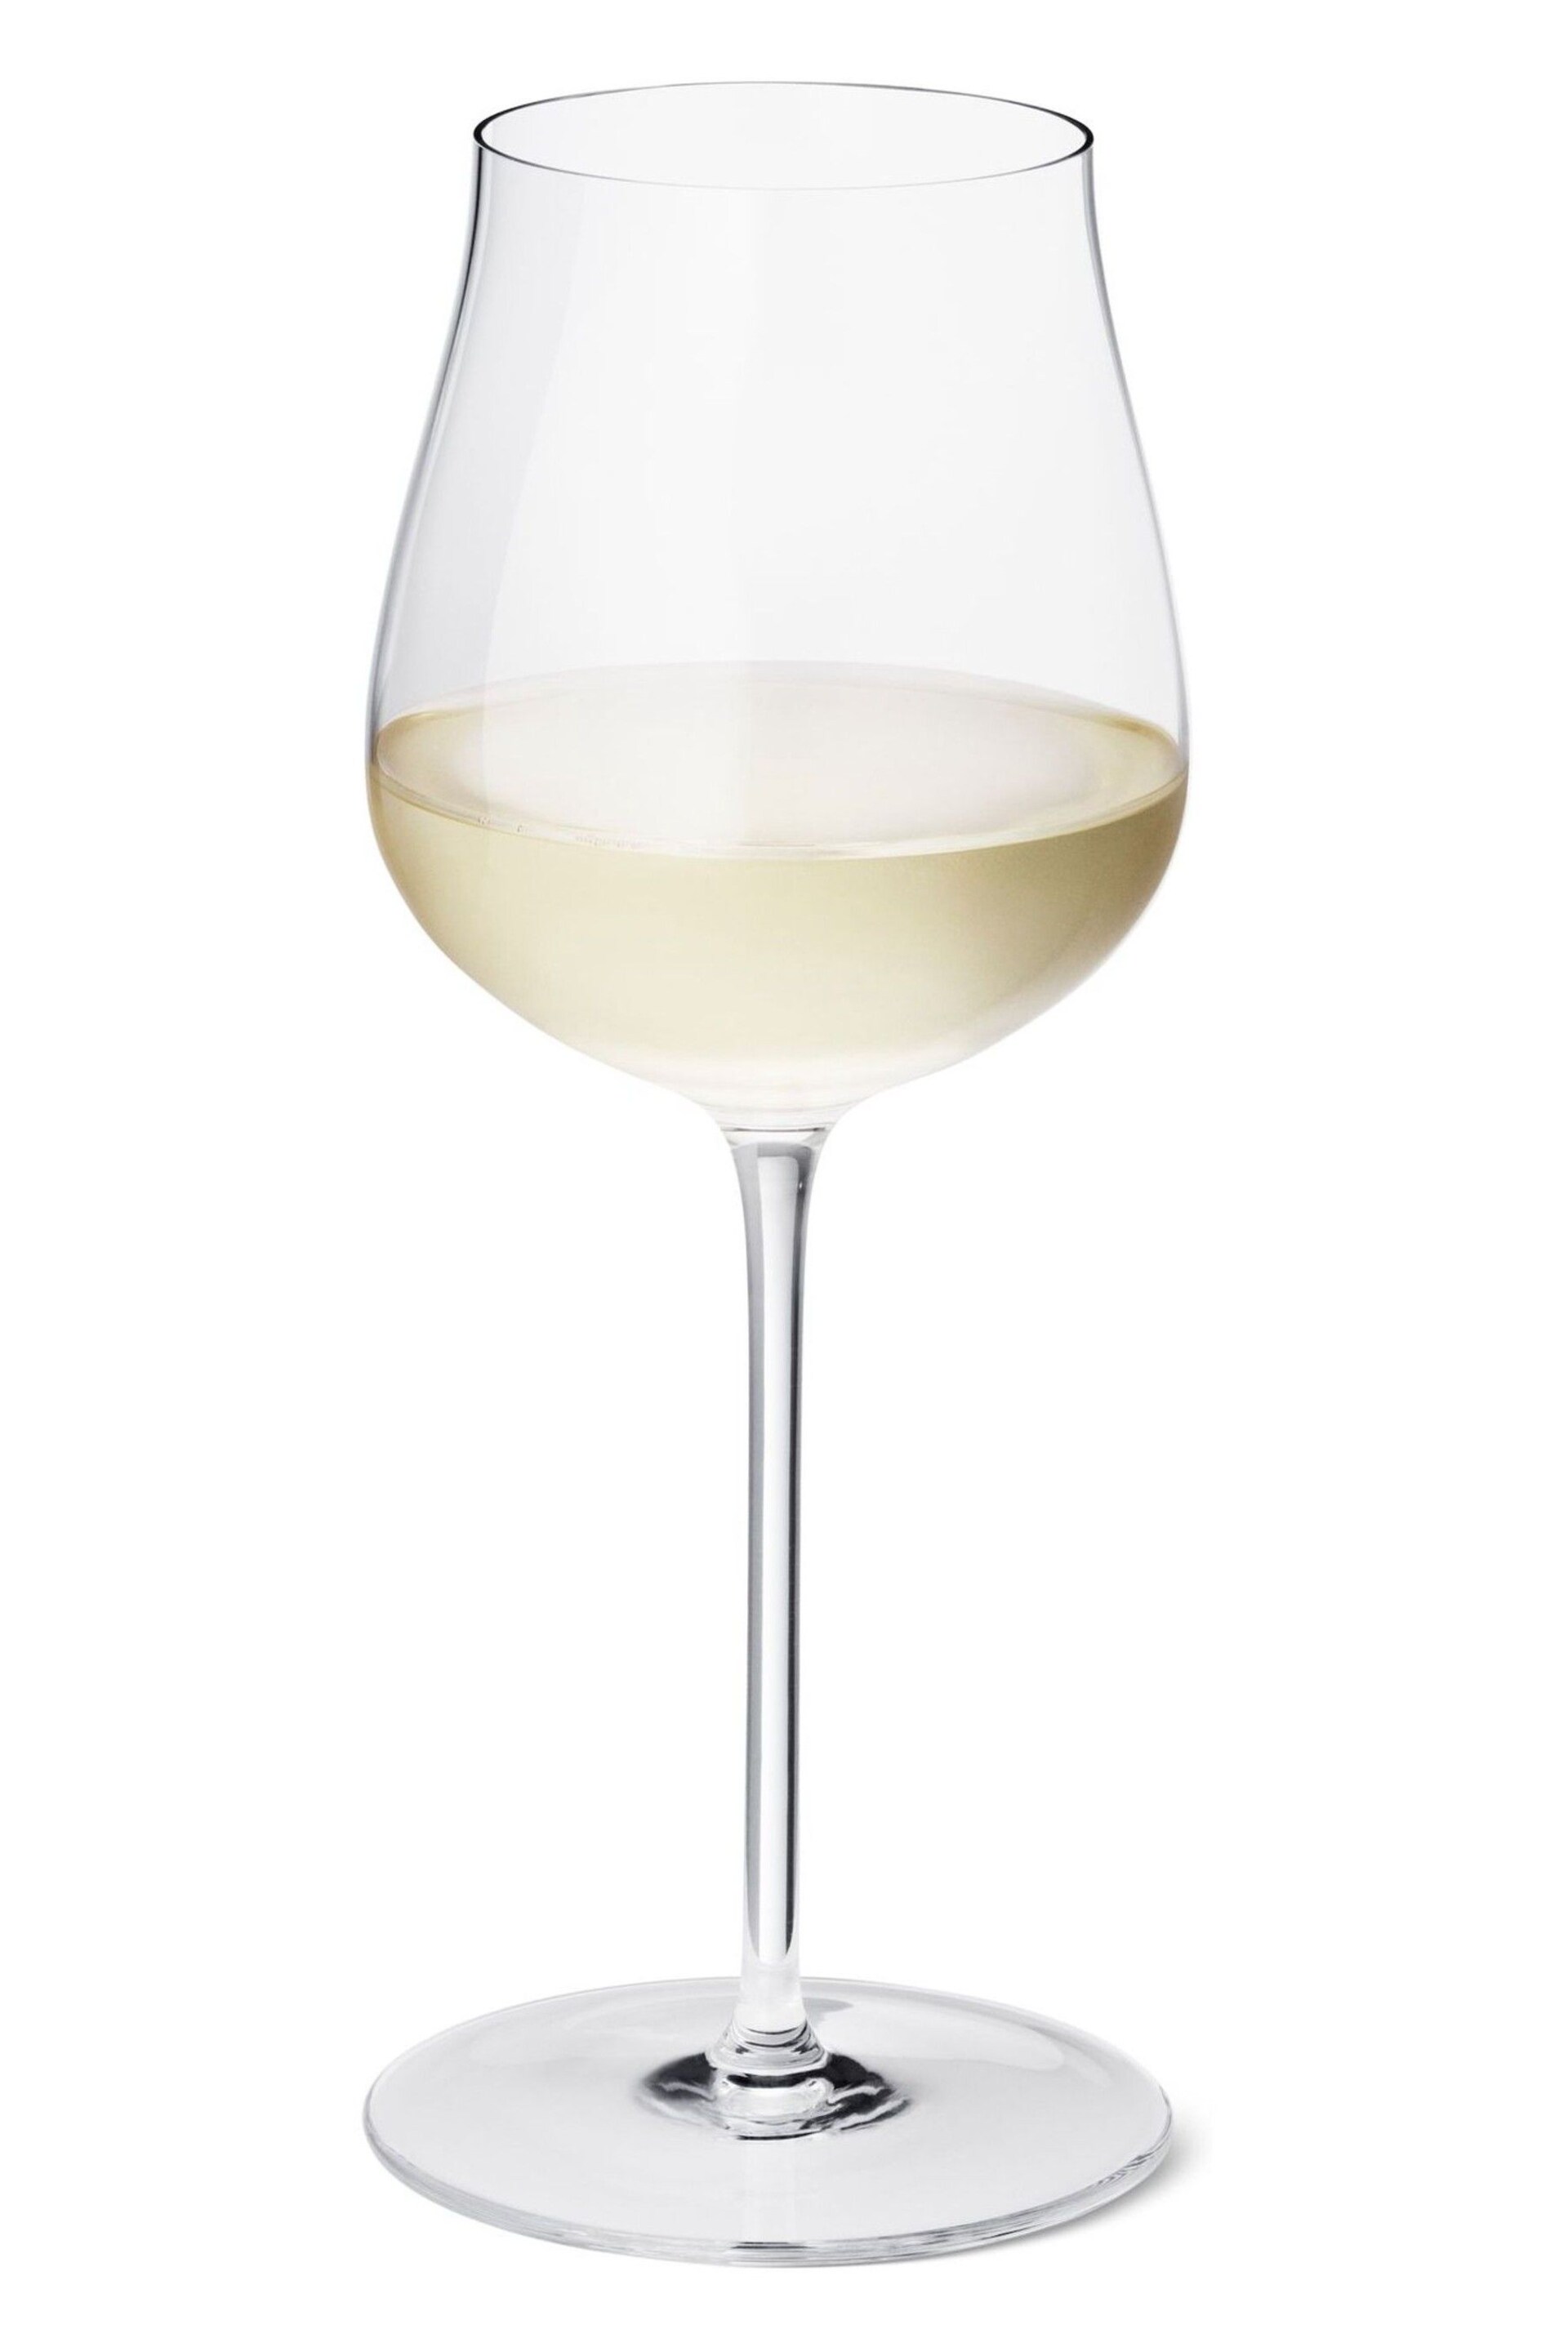 Georg Jensen Sky Set of 6 White Wine Crystalline Glasses 35CL - Image 3 of 3